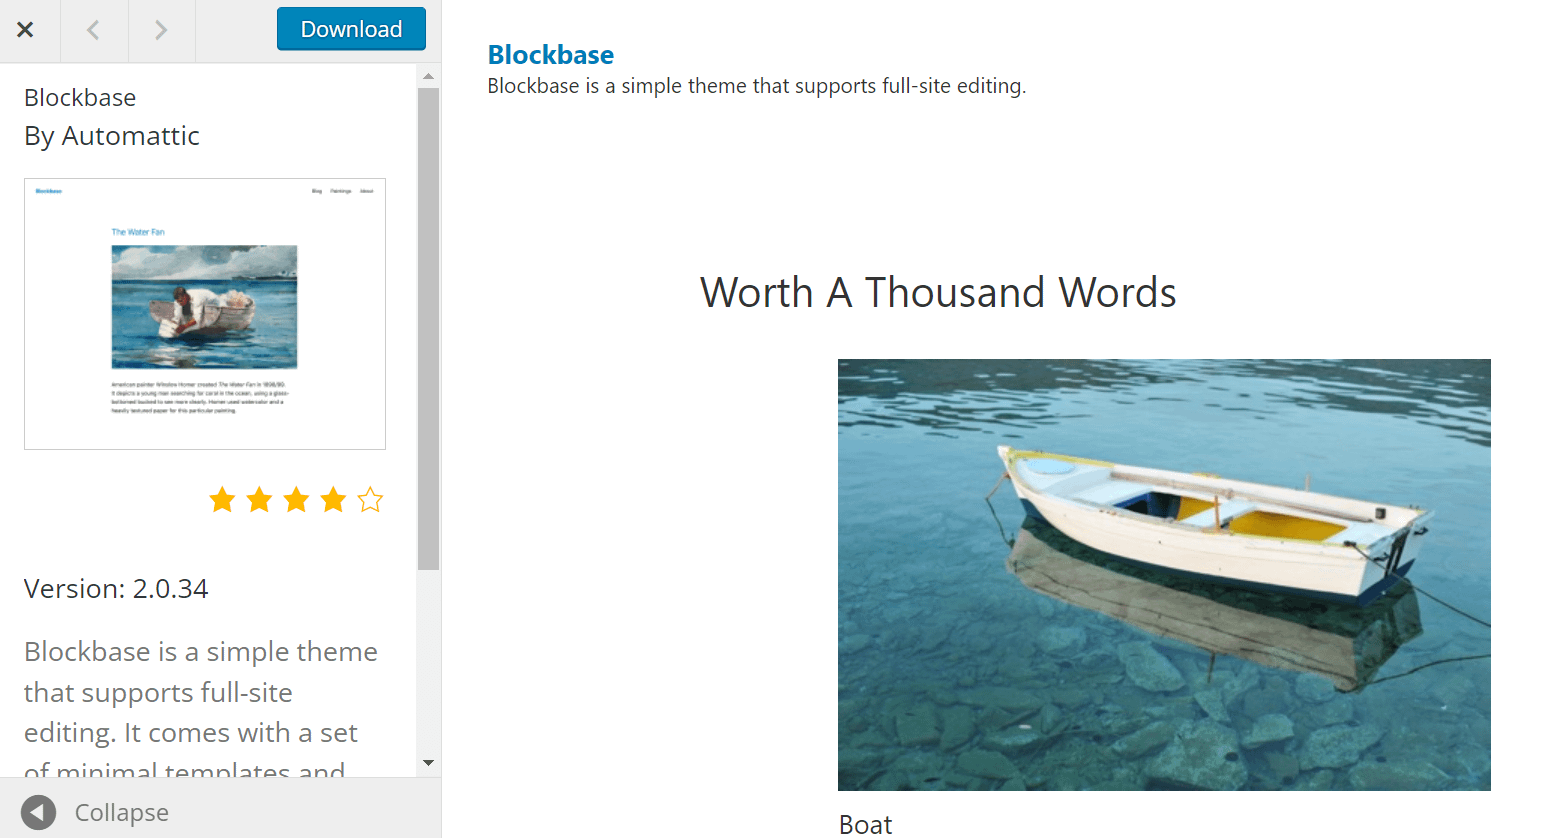 Chủ đề Blockbase